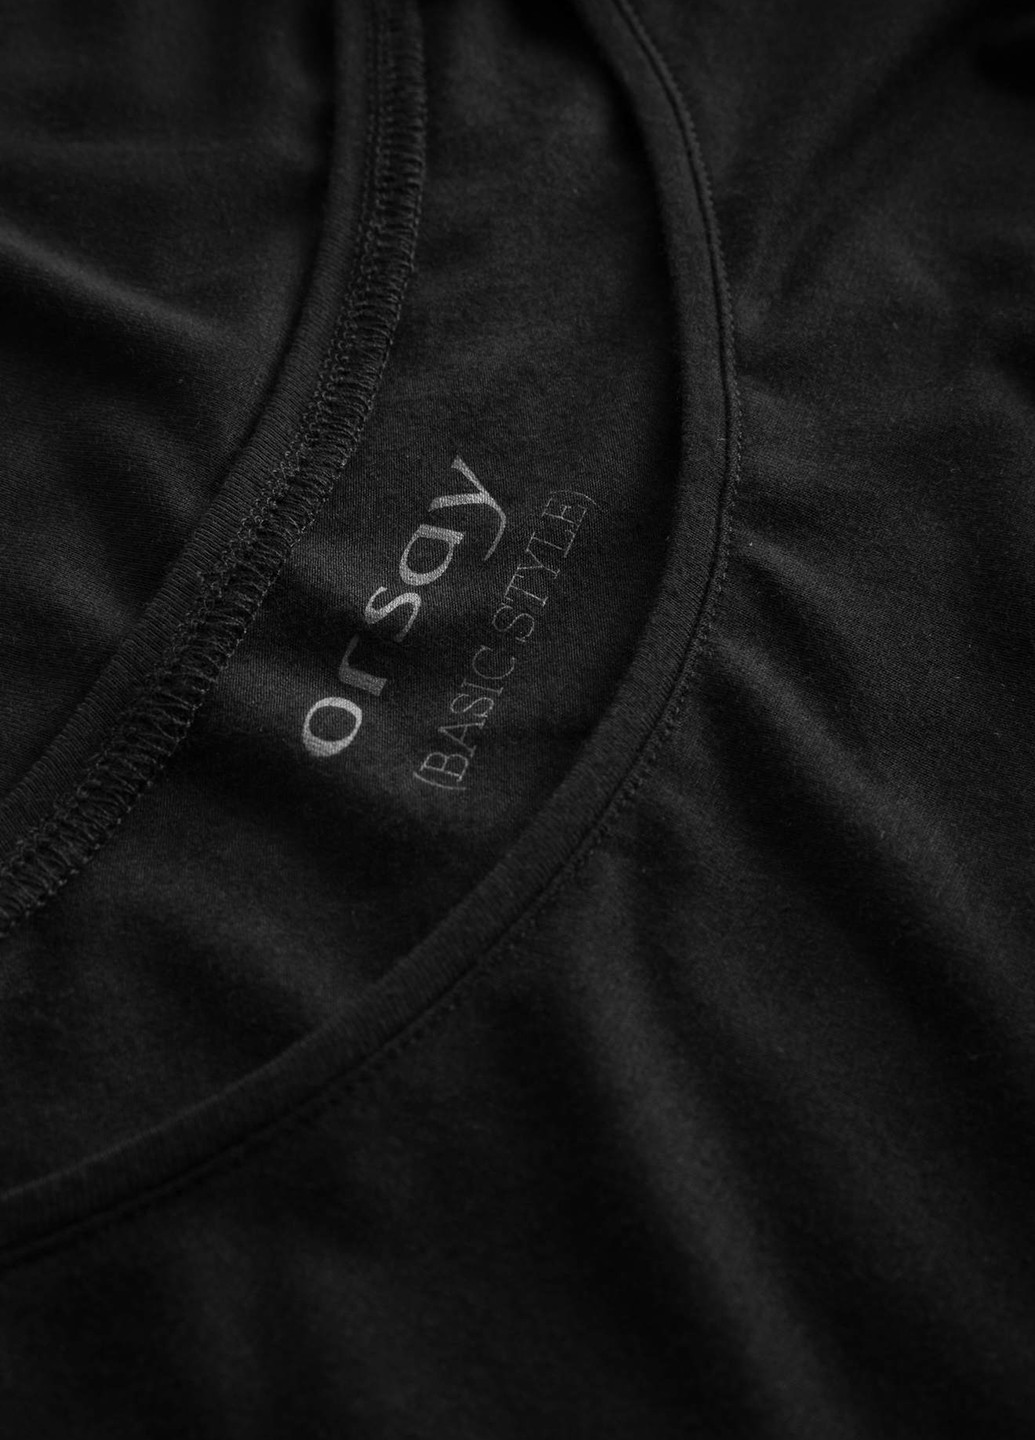 Черная летняя футболка с коротким рукавом Orsay